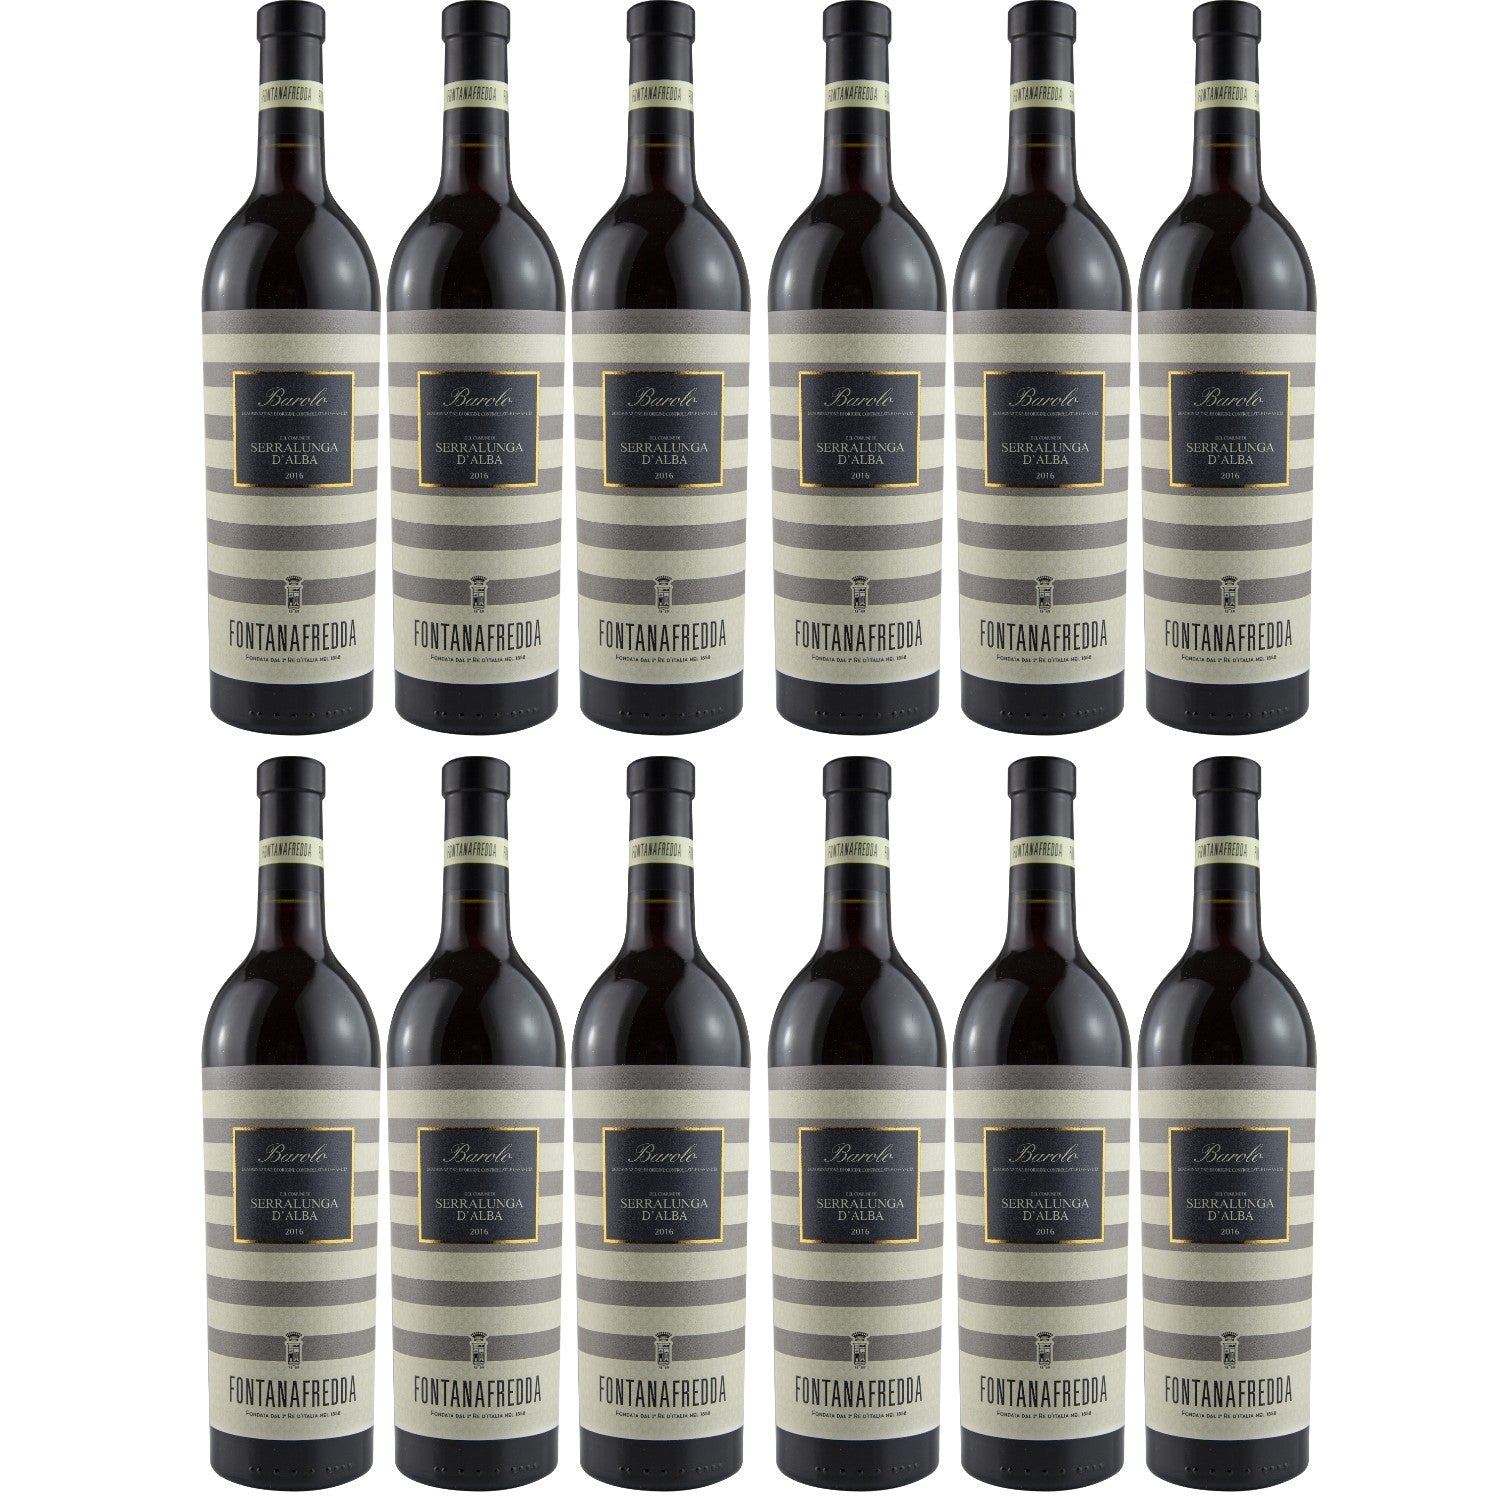 Fontanafredda Serralunga d'Alba Barolo DOCG Rotwein Wein trocken Italien (12 x 0.75l) - Versanel -